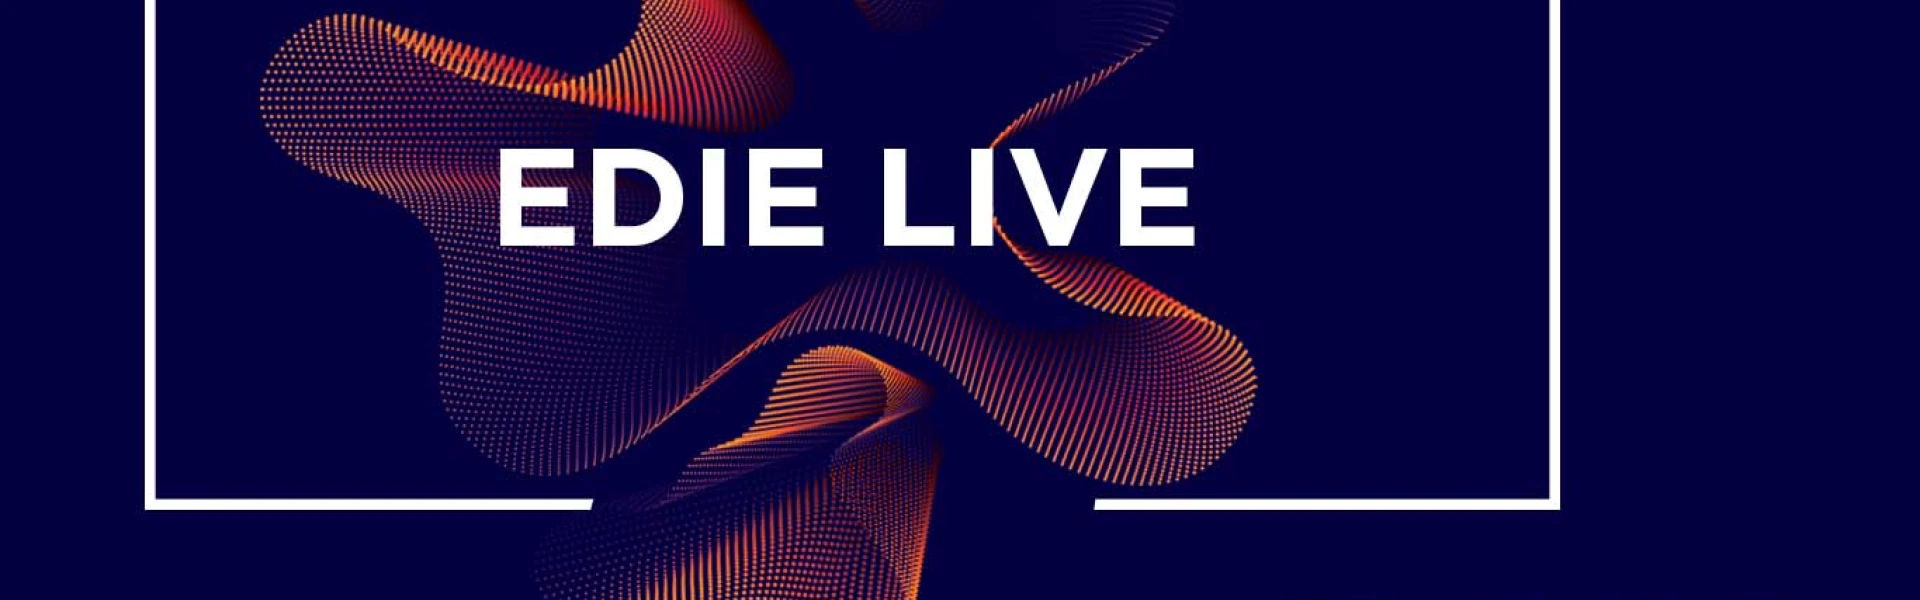 Inspired Energy - Edie Live logo design